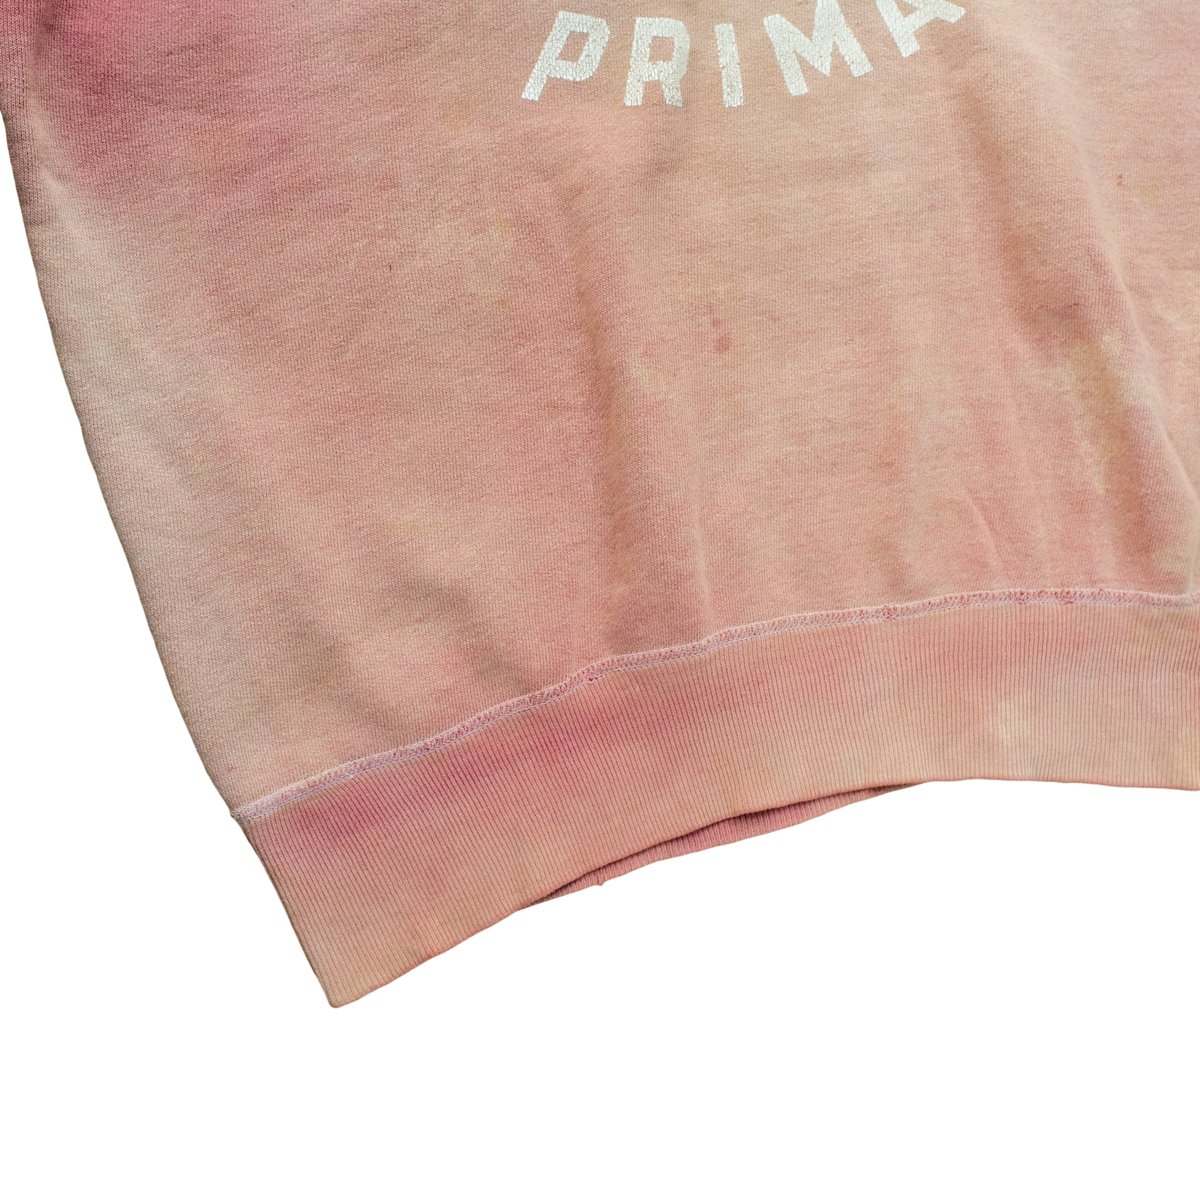 Image of Vintage 50s/60s Sunfaded Alpha Prima Cut Off Sweatshirt